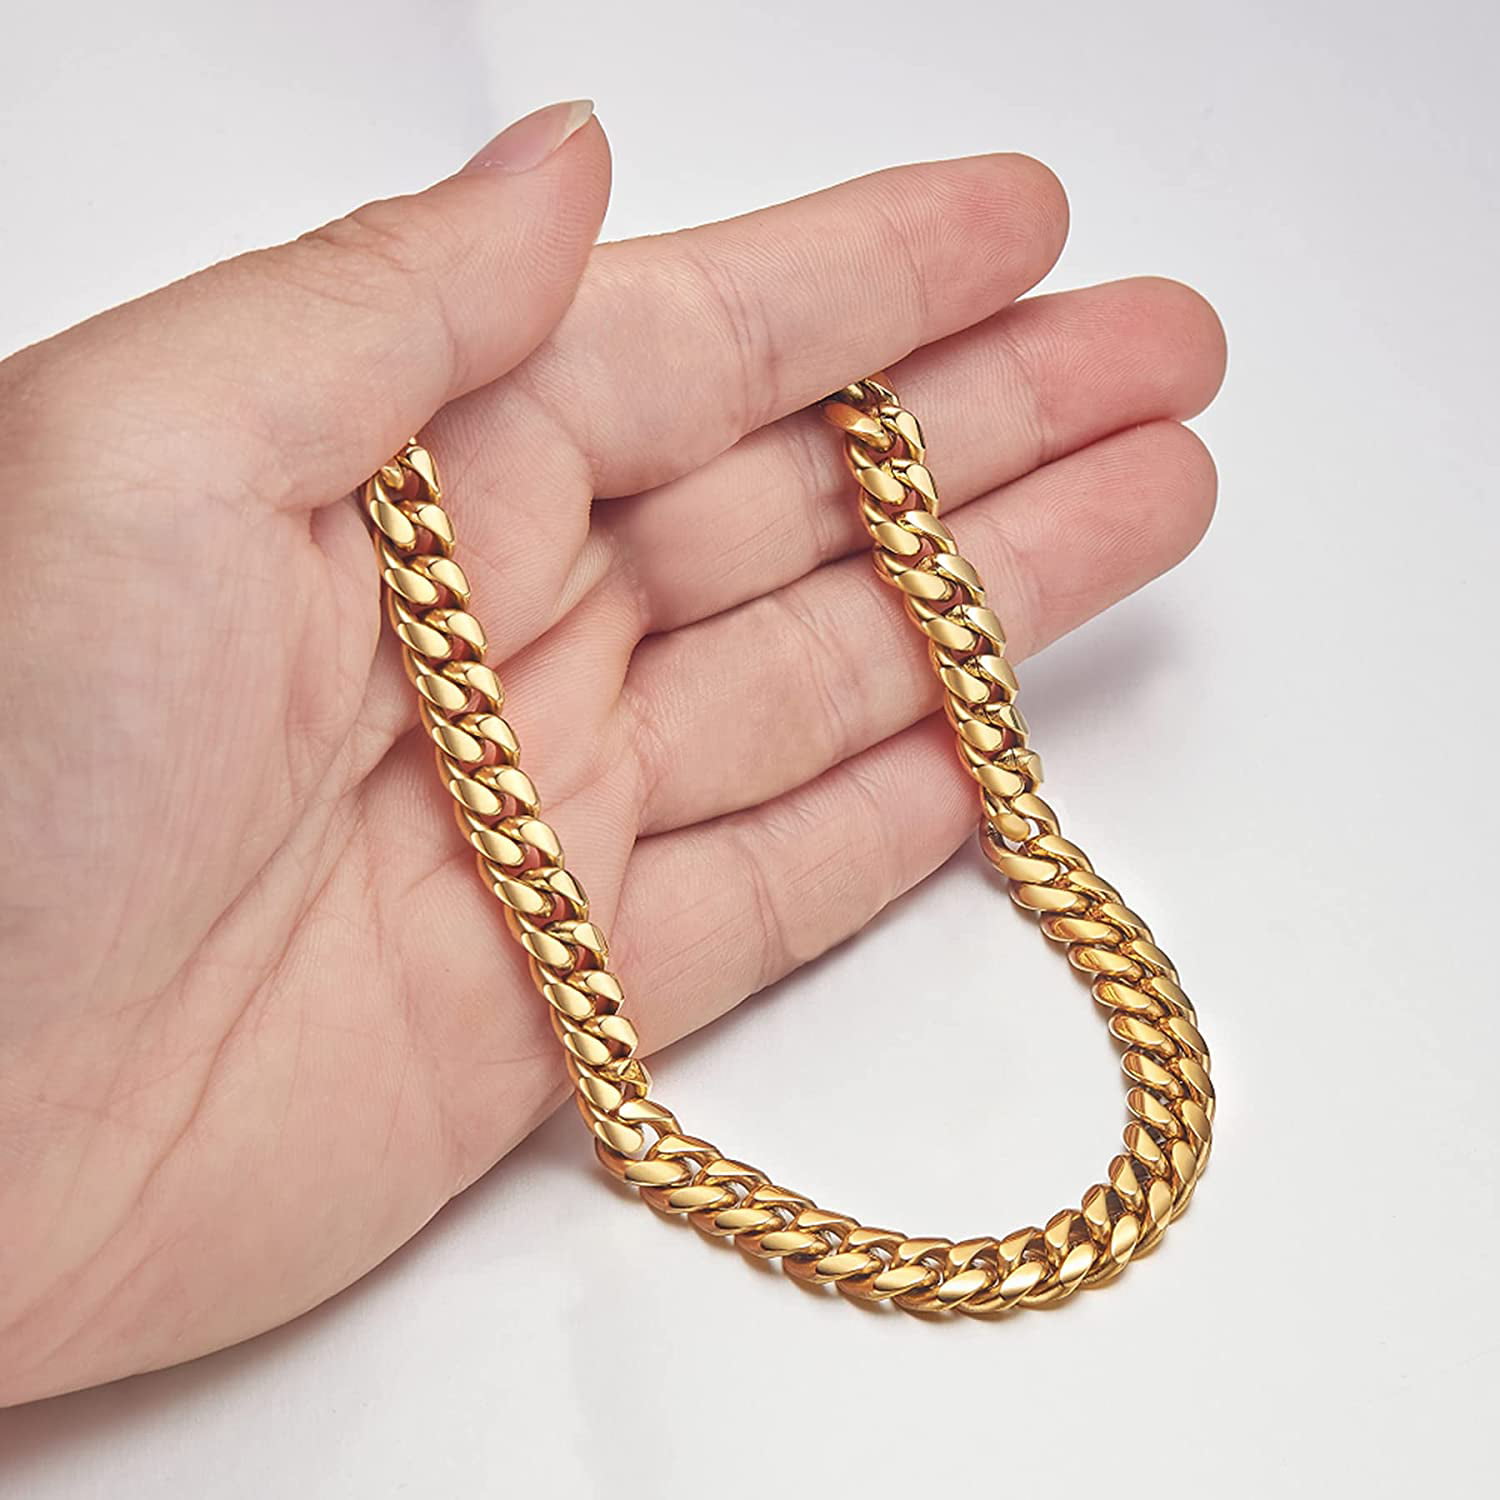 SANNYRA 18k Real Gold Plated Curb Cuban Chain Bracelet Stainless Steel Link Bracelet for Men 